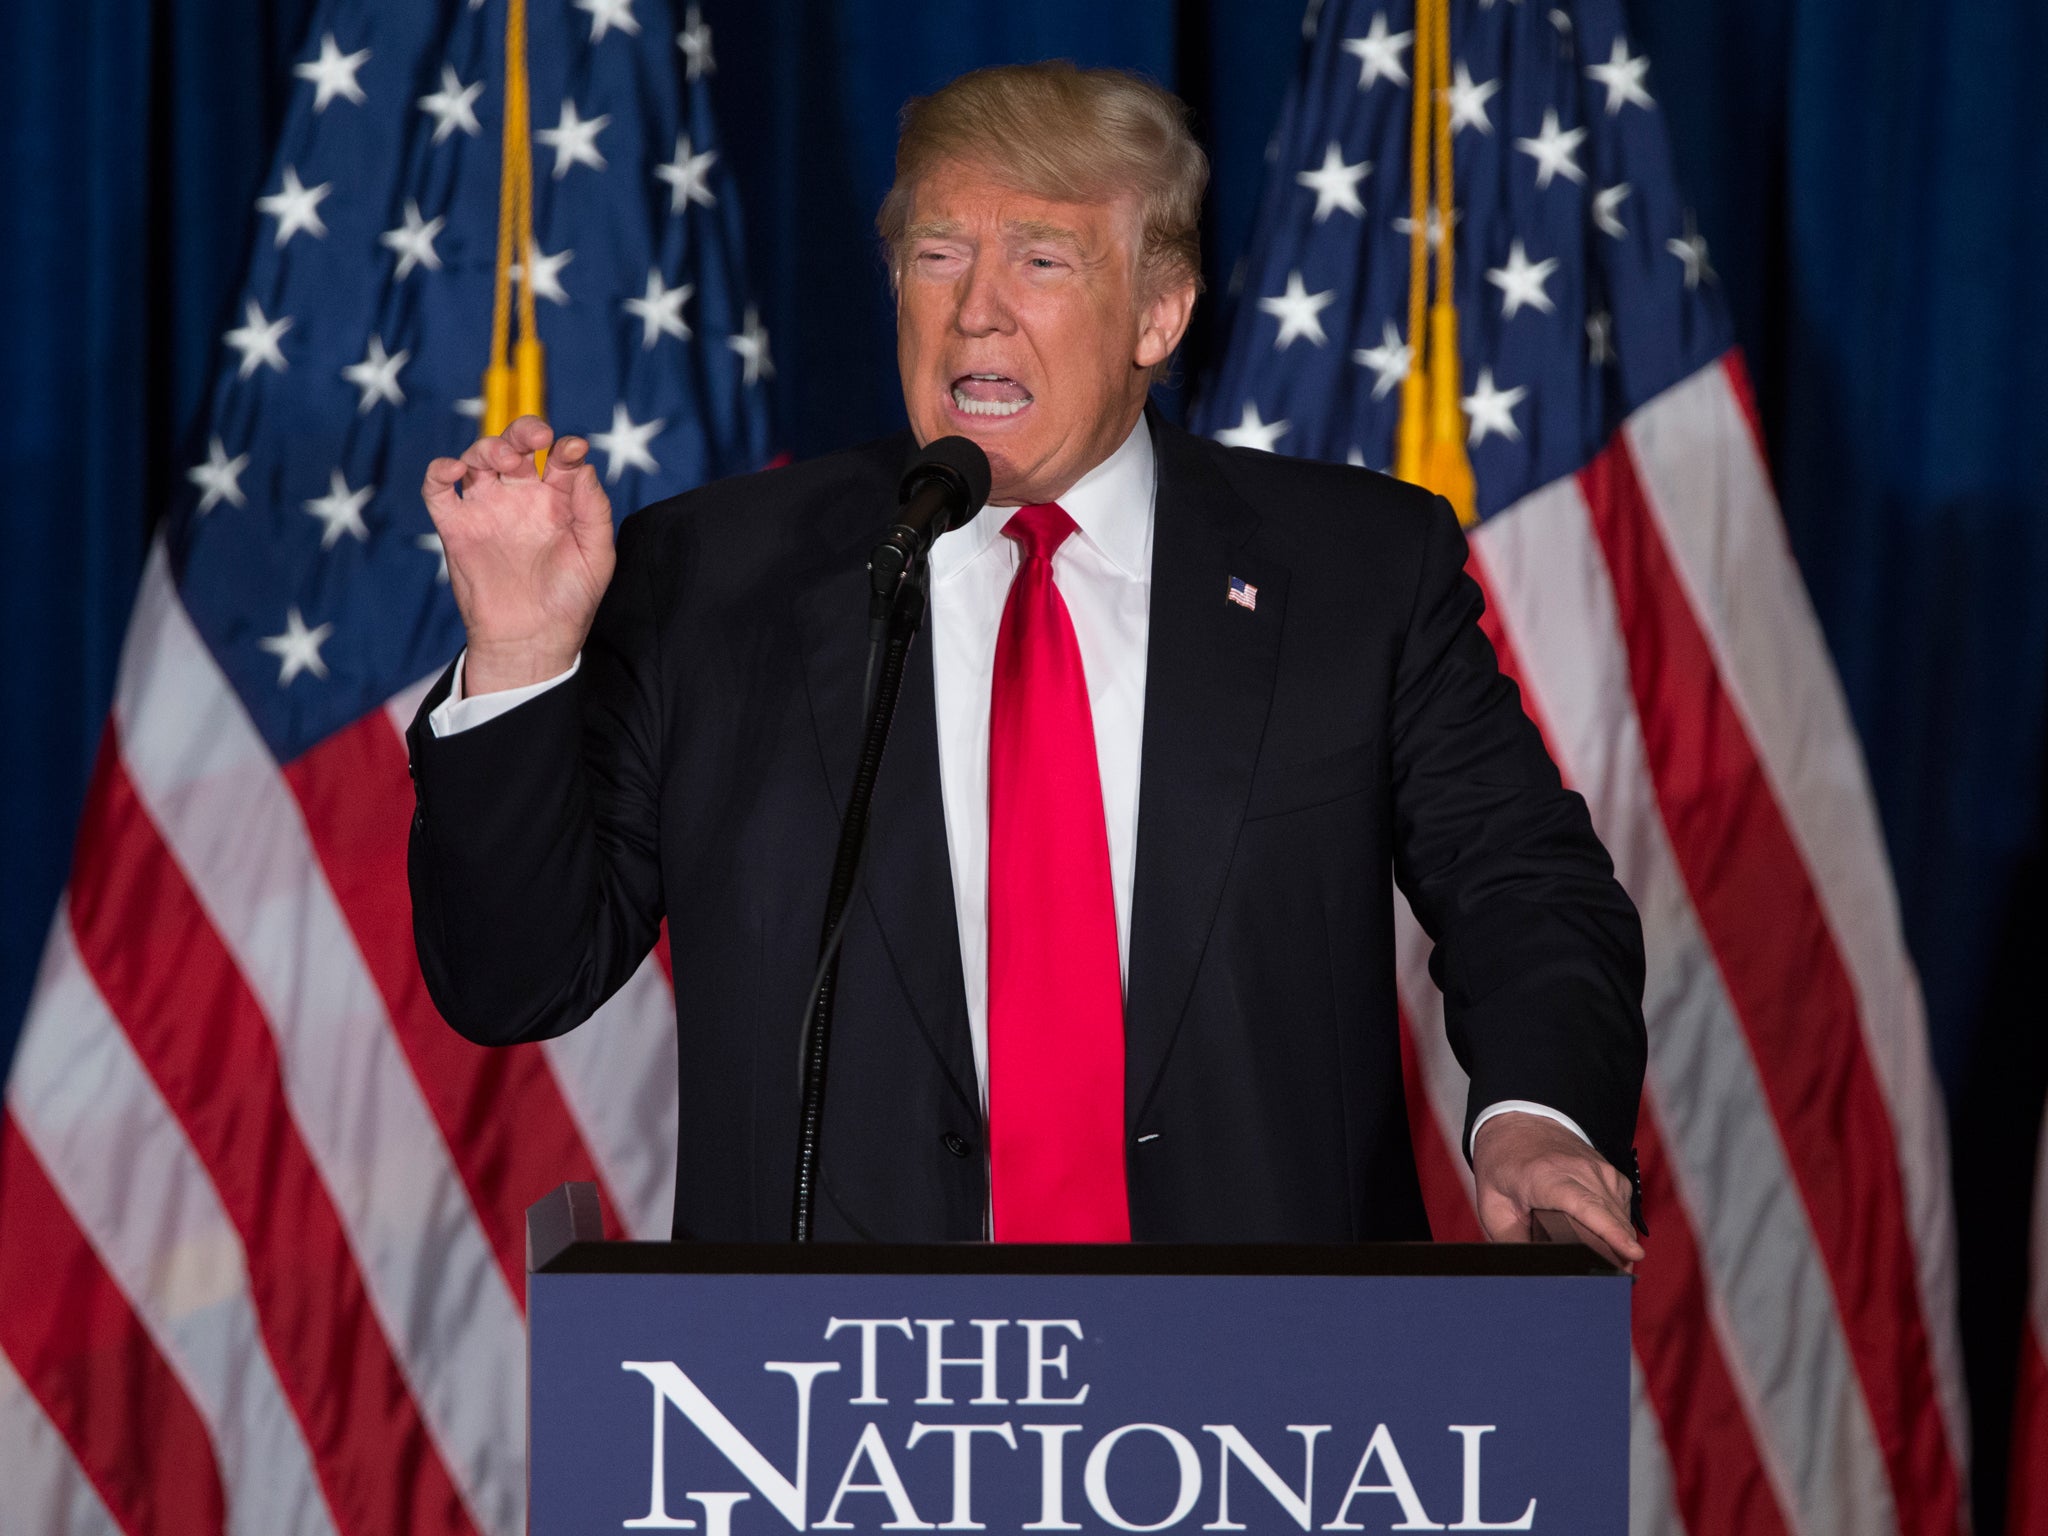 Donald Trump gave a major foreign policy speech in Washington, AP